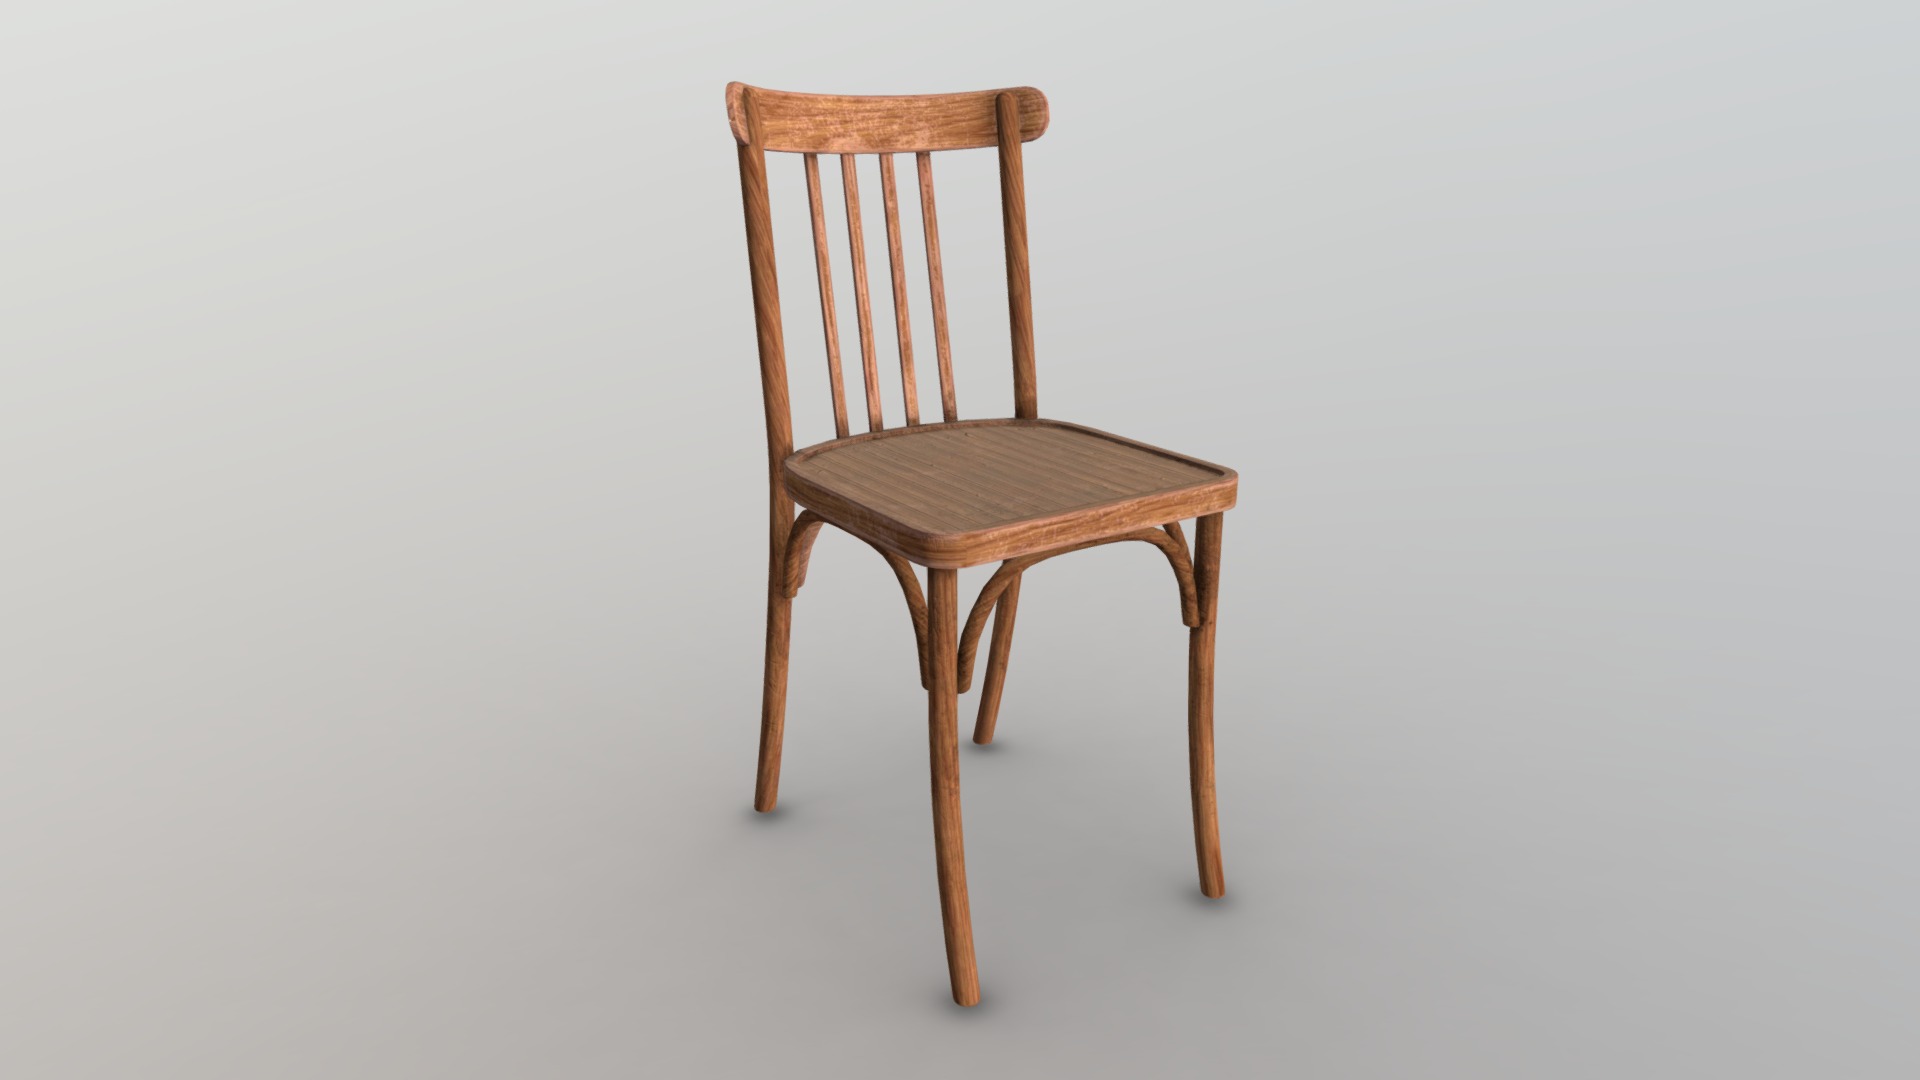 3D model Der Stuhl - This is a 3D model of the Der Stuhl. The 3D model is about a wooden chair with a cushion.